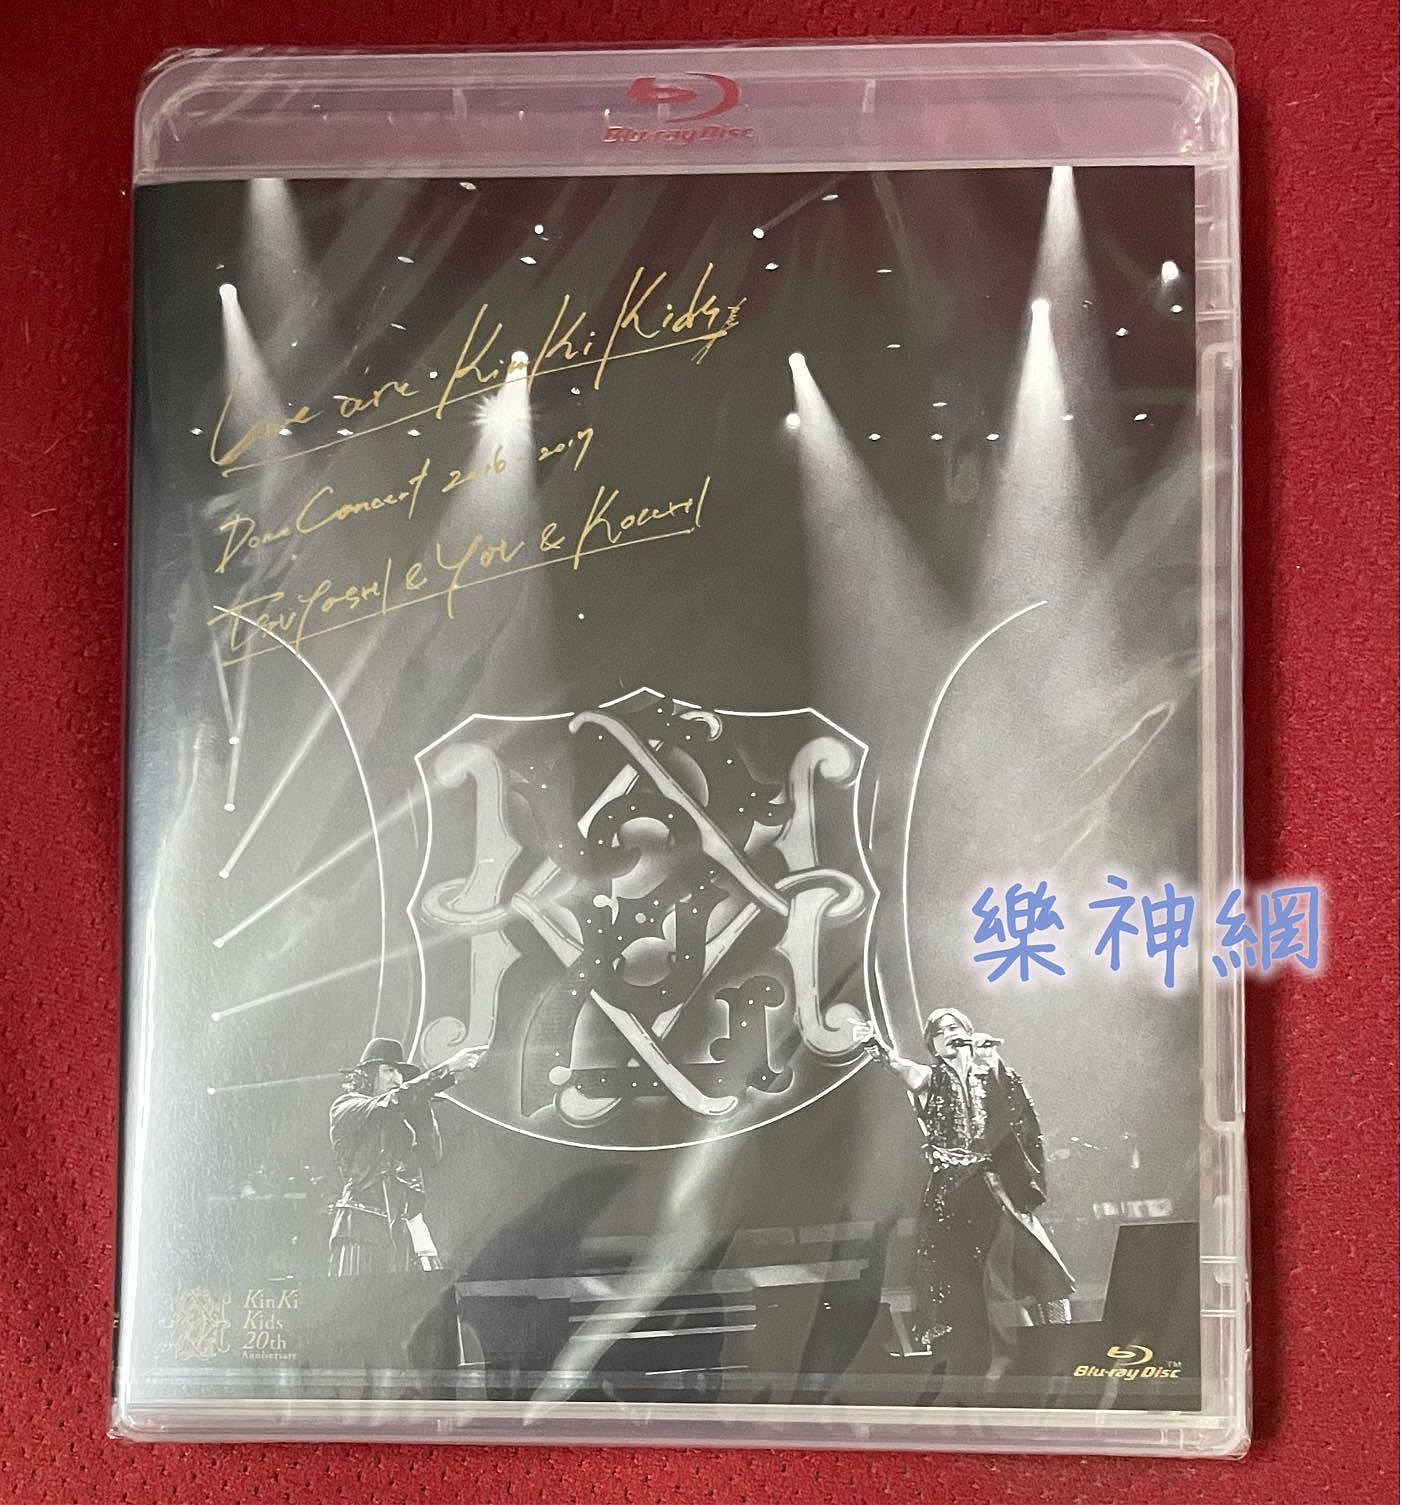 We are KinKi Kids Dome Concert 初回盤 - ミュージック